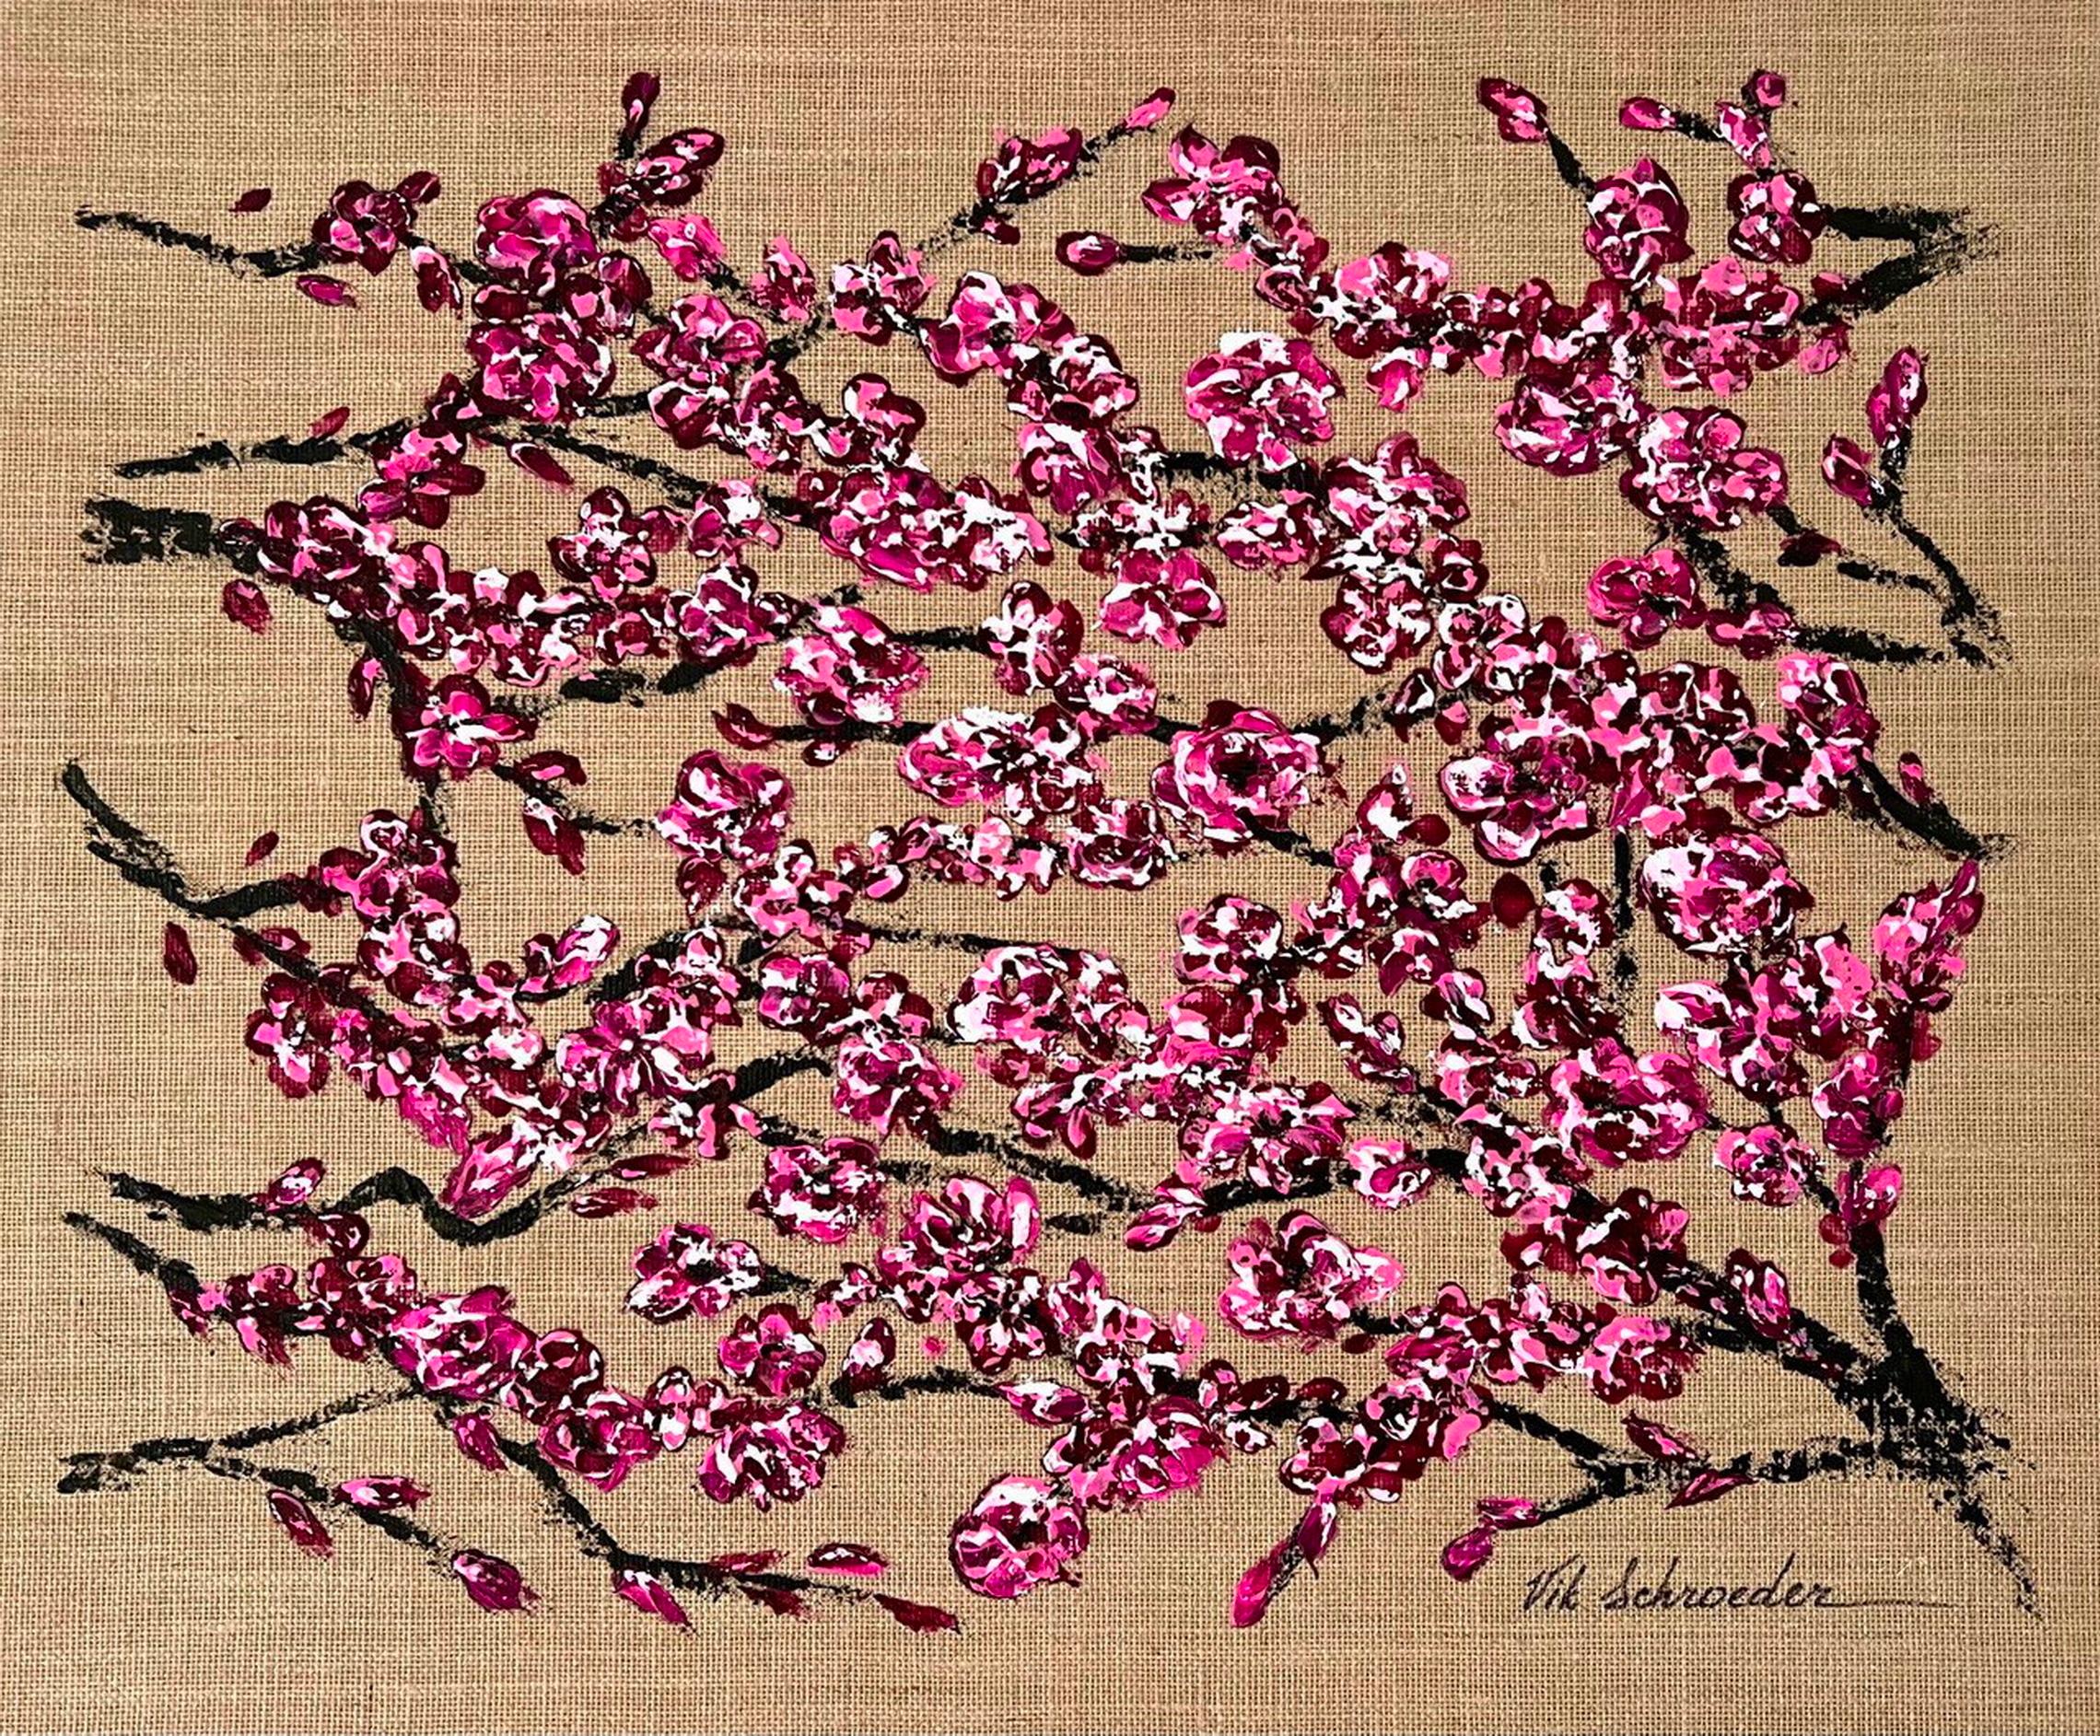  glaçure Sakura / Art original cadeau / arbres en fleurs au printemps / 50/60 cm.